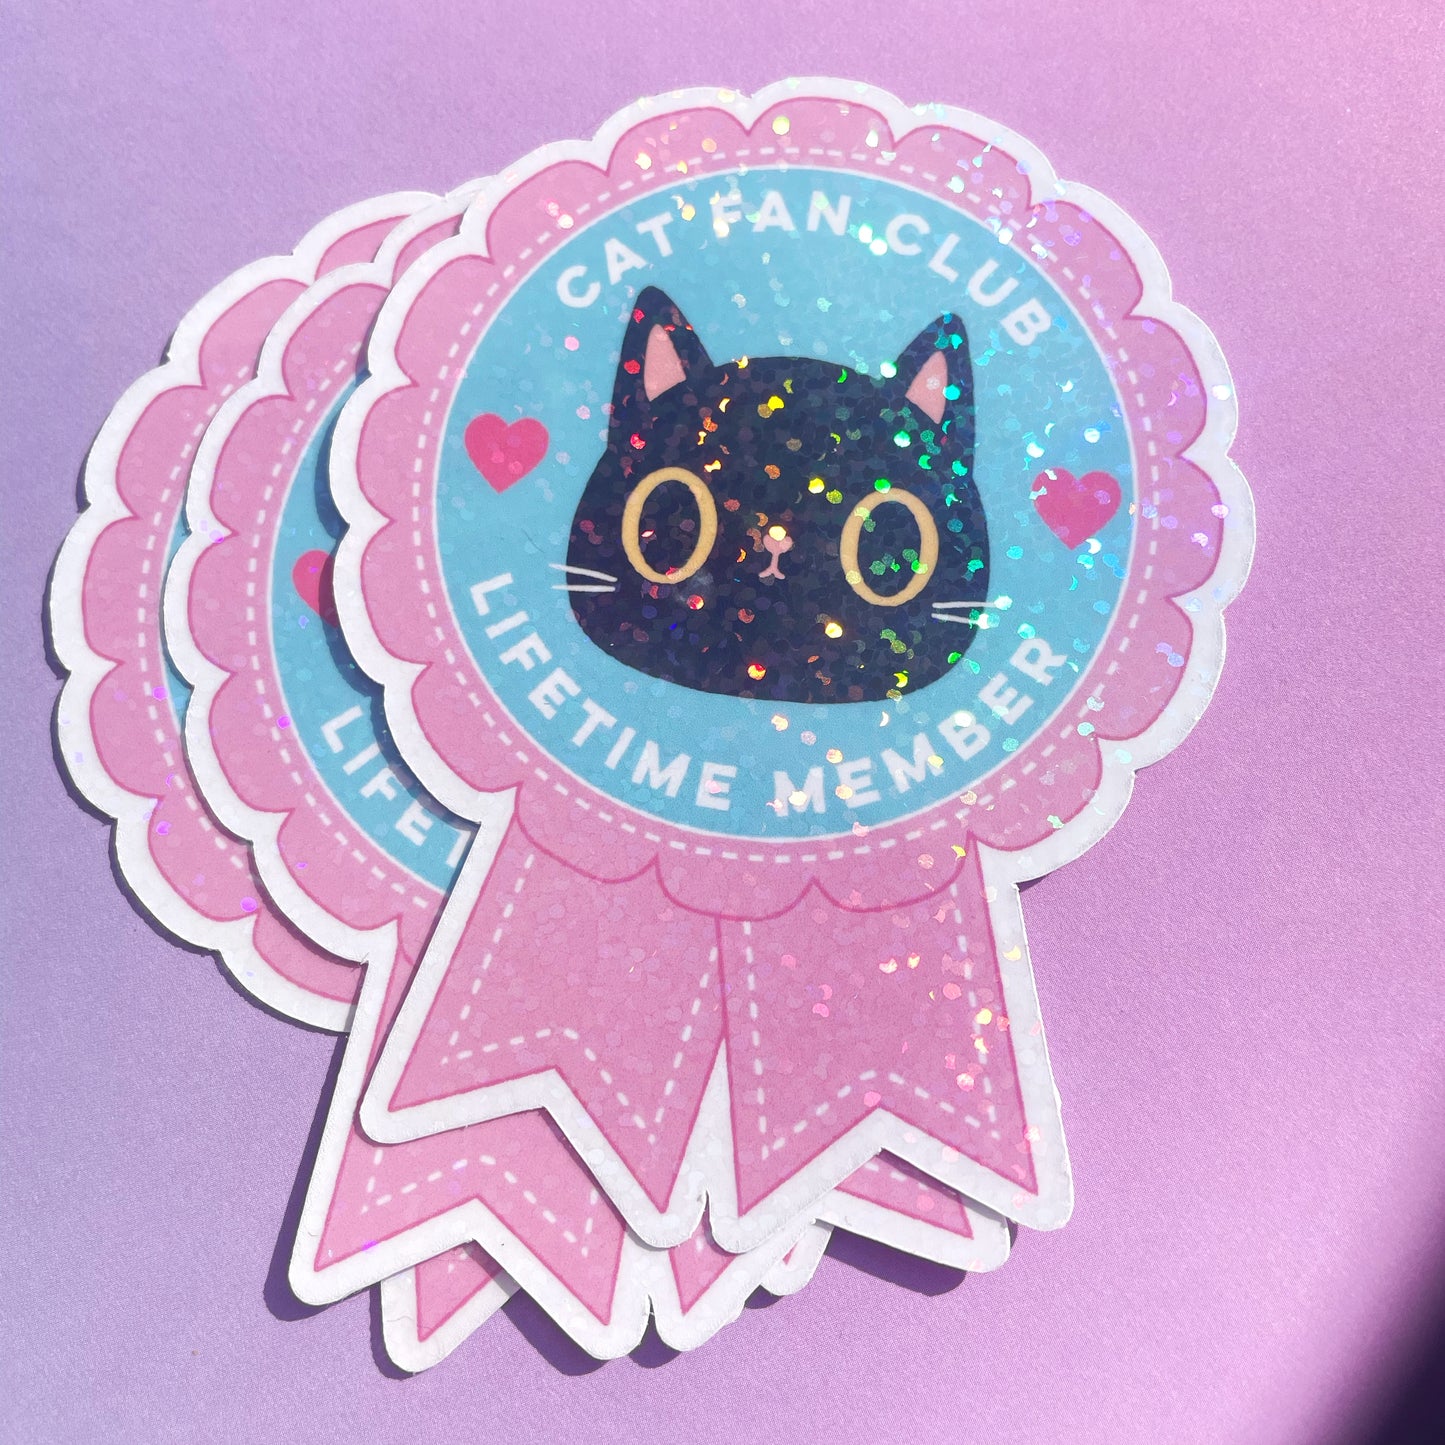 Rosette Cat Fan Club sparkly holographic vinyl sticker